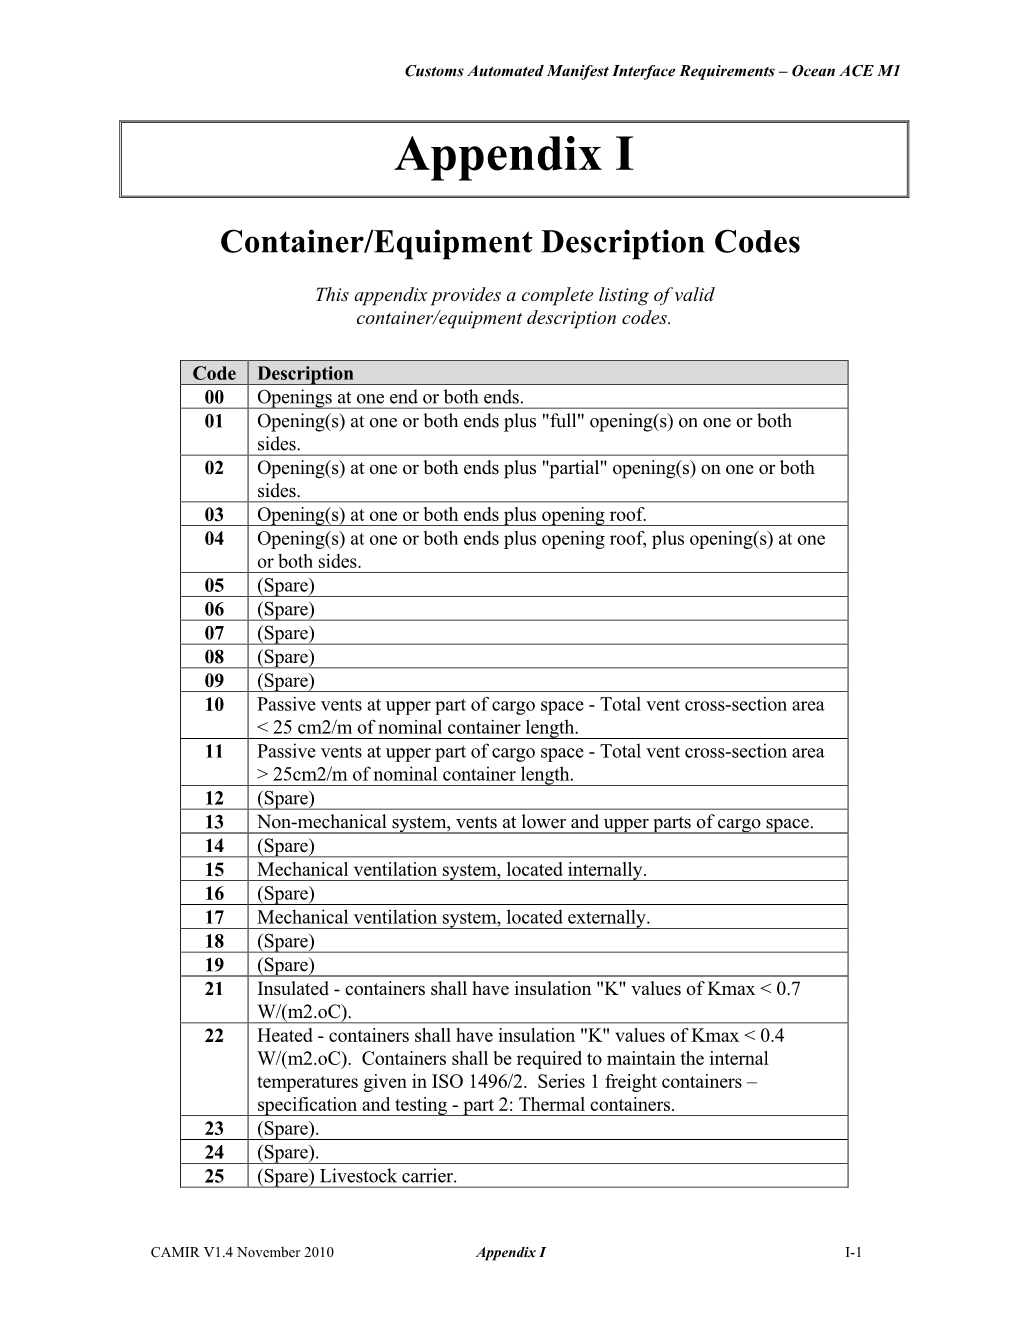 Appendix I – Container/Equipment Description Codes